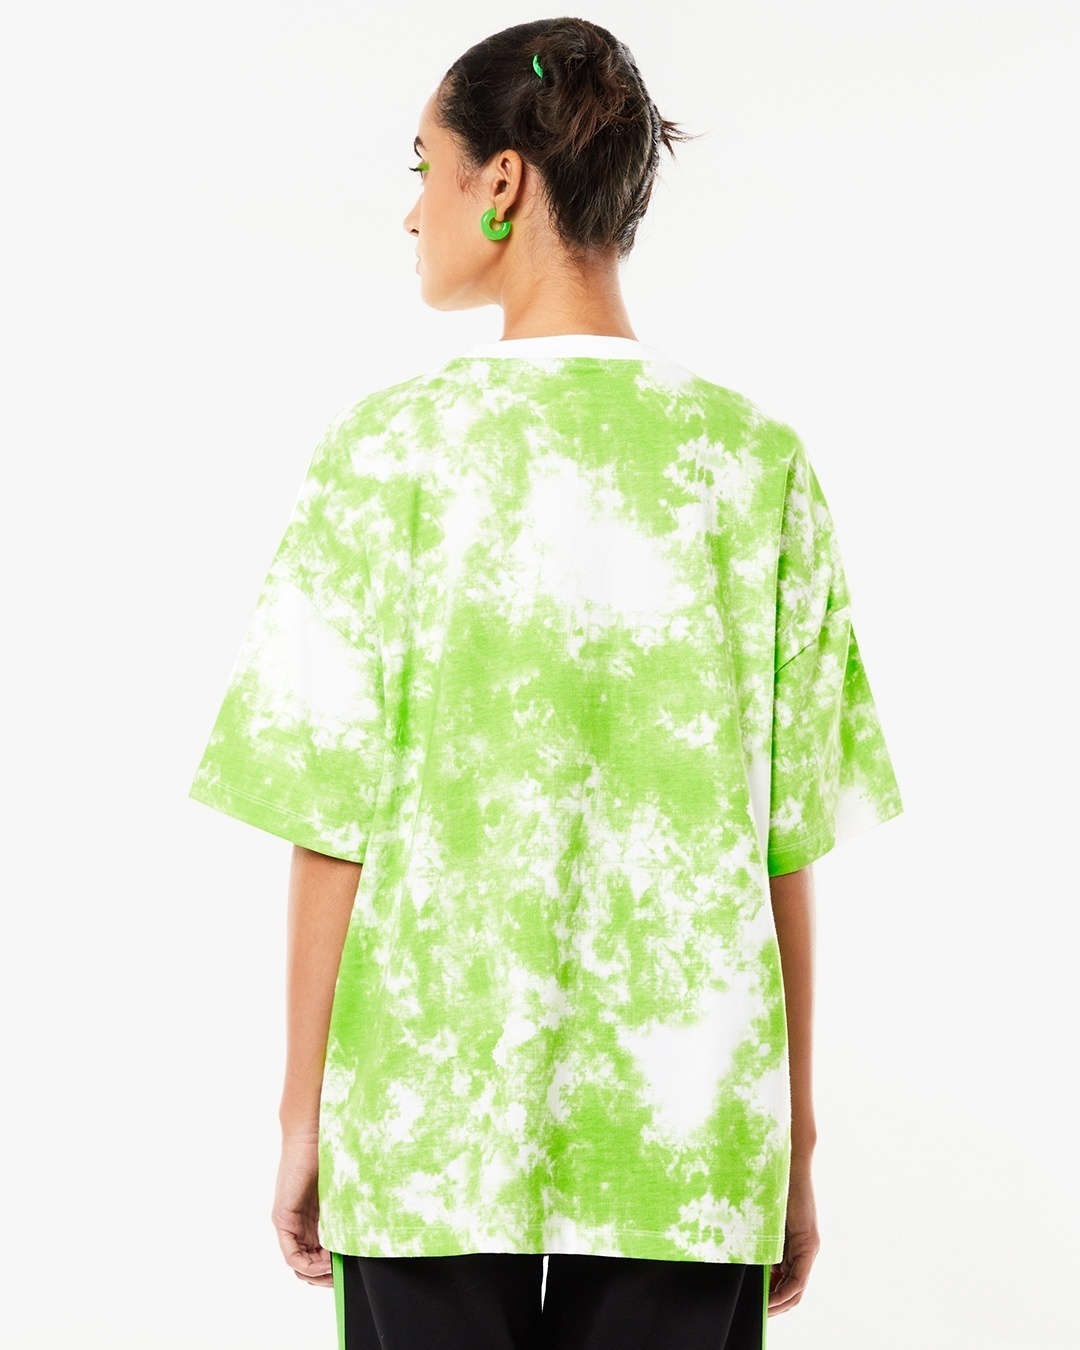 Shop Unisex Green & White Level Up Tie & Dye Typography T-shirt